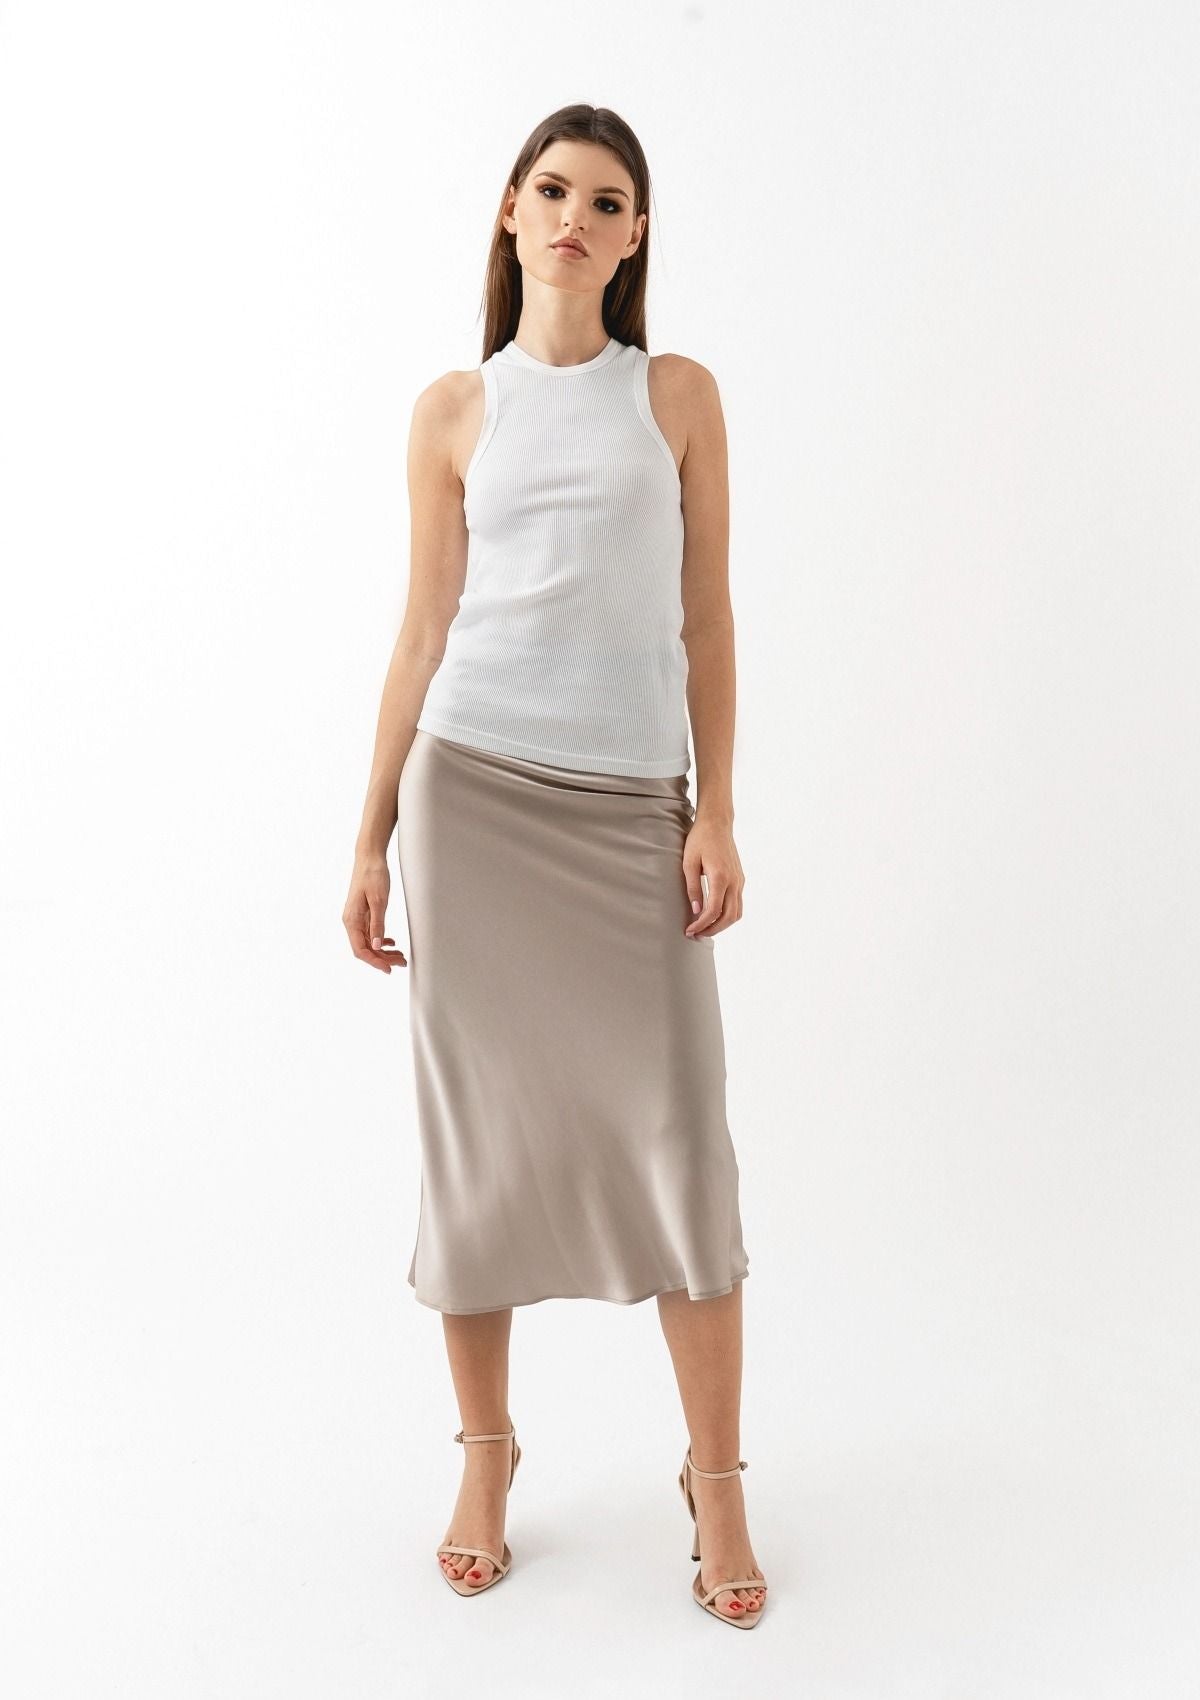 A neutral beige midi silk slip skirt by Silk & tonic fashion brand